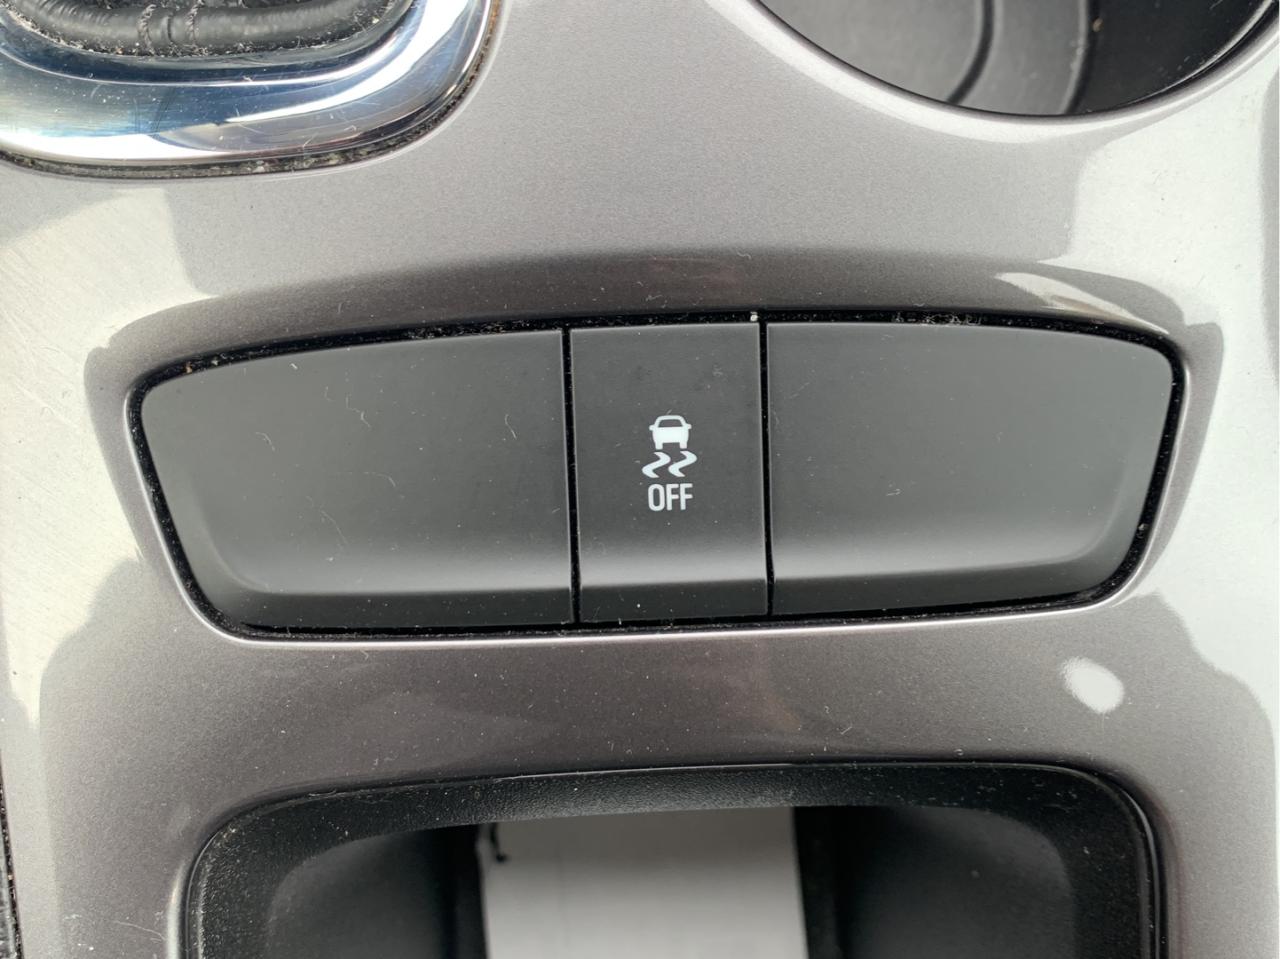 Preowned 2018 Chevrolet Cruze, 4 doors, Sedan, Toronto